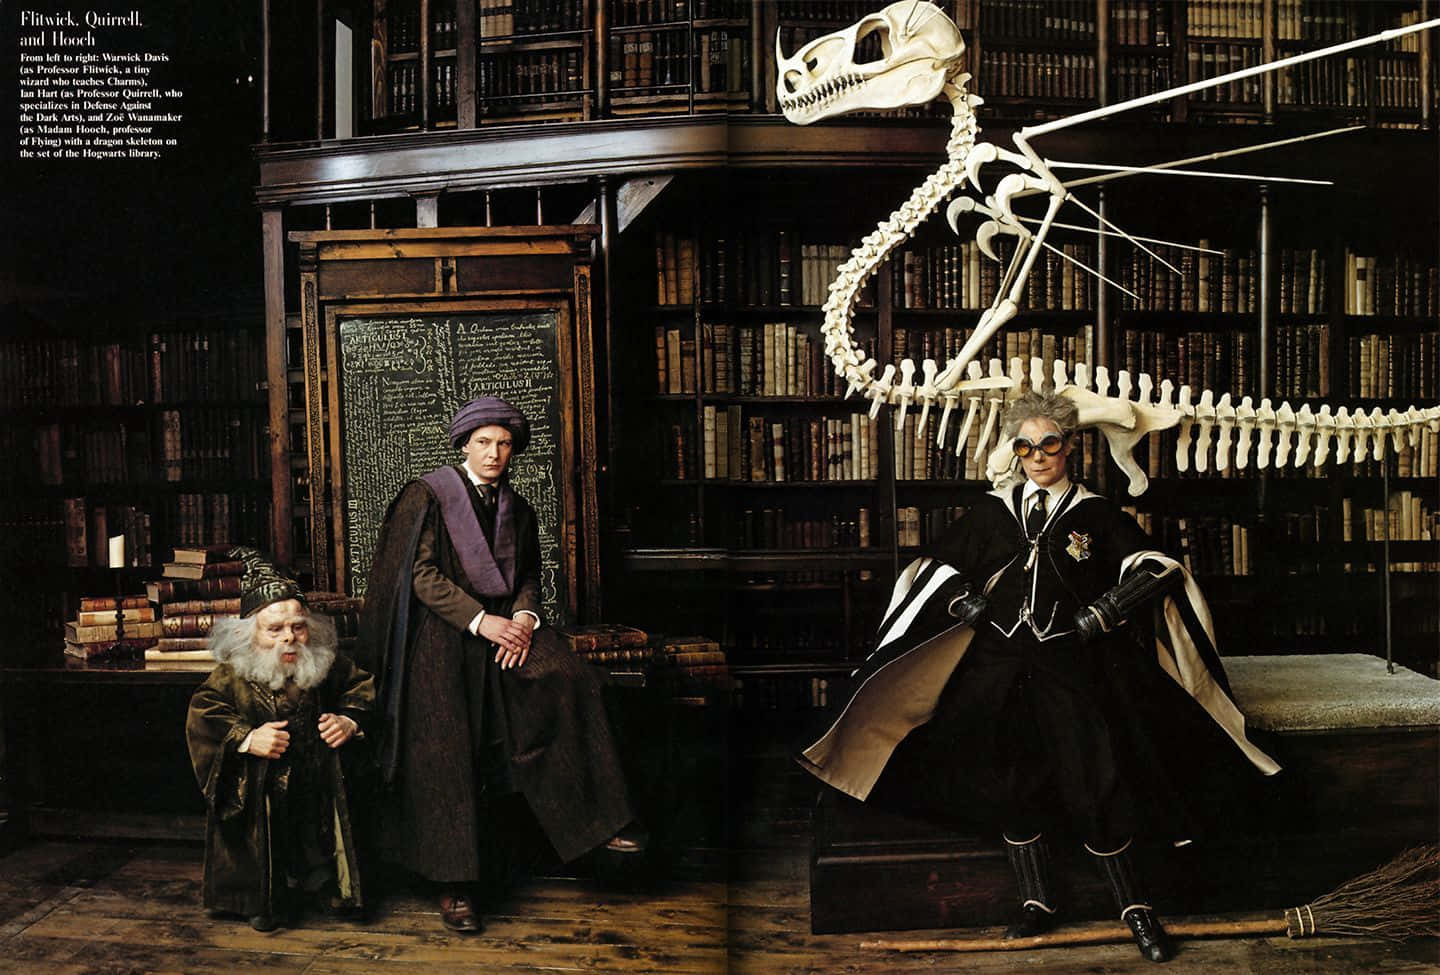 Albus Dumbledore Presides Over The Hogwarts Library" Wallpaper